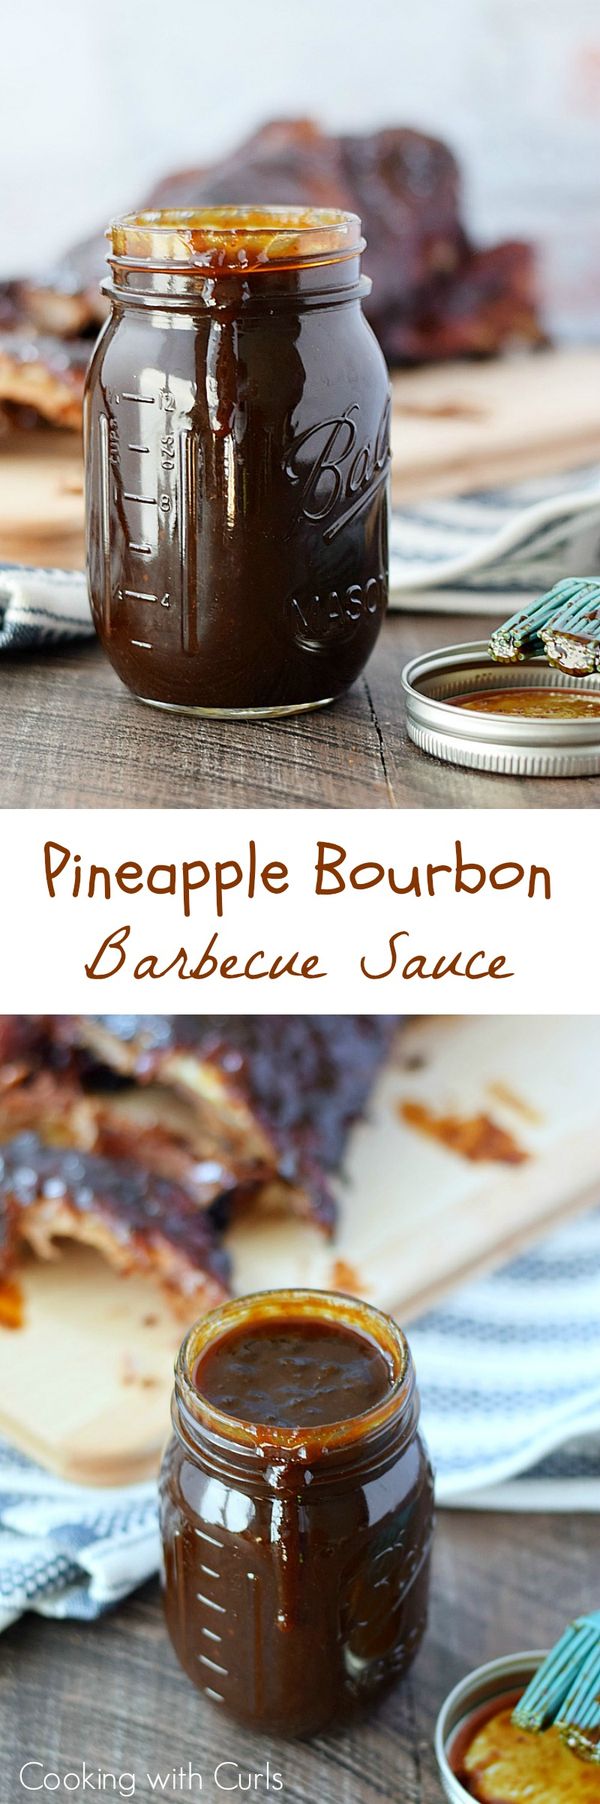 Pineapple Bourbon Barbecue Sauce